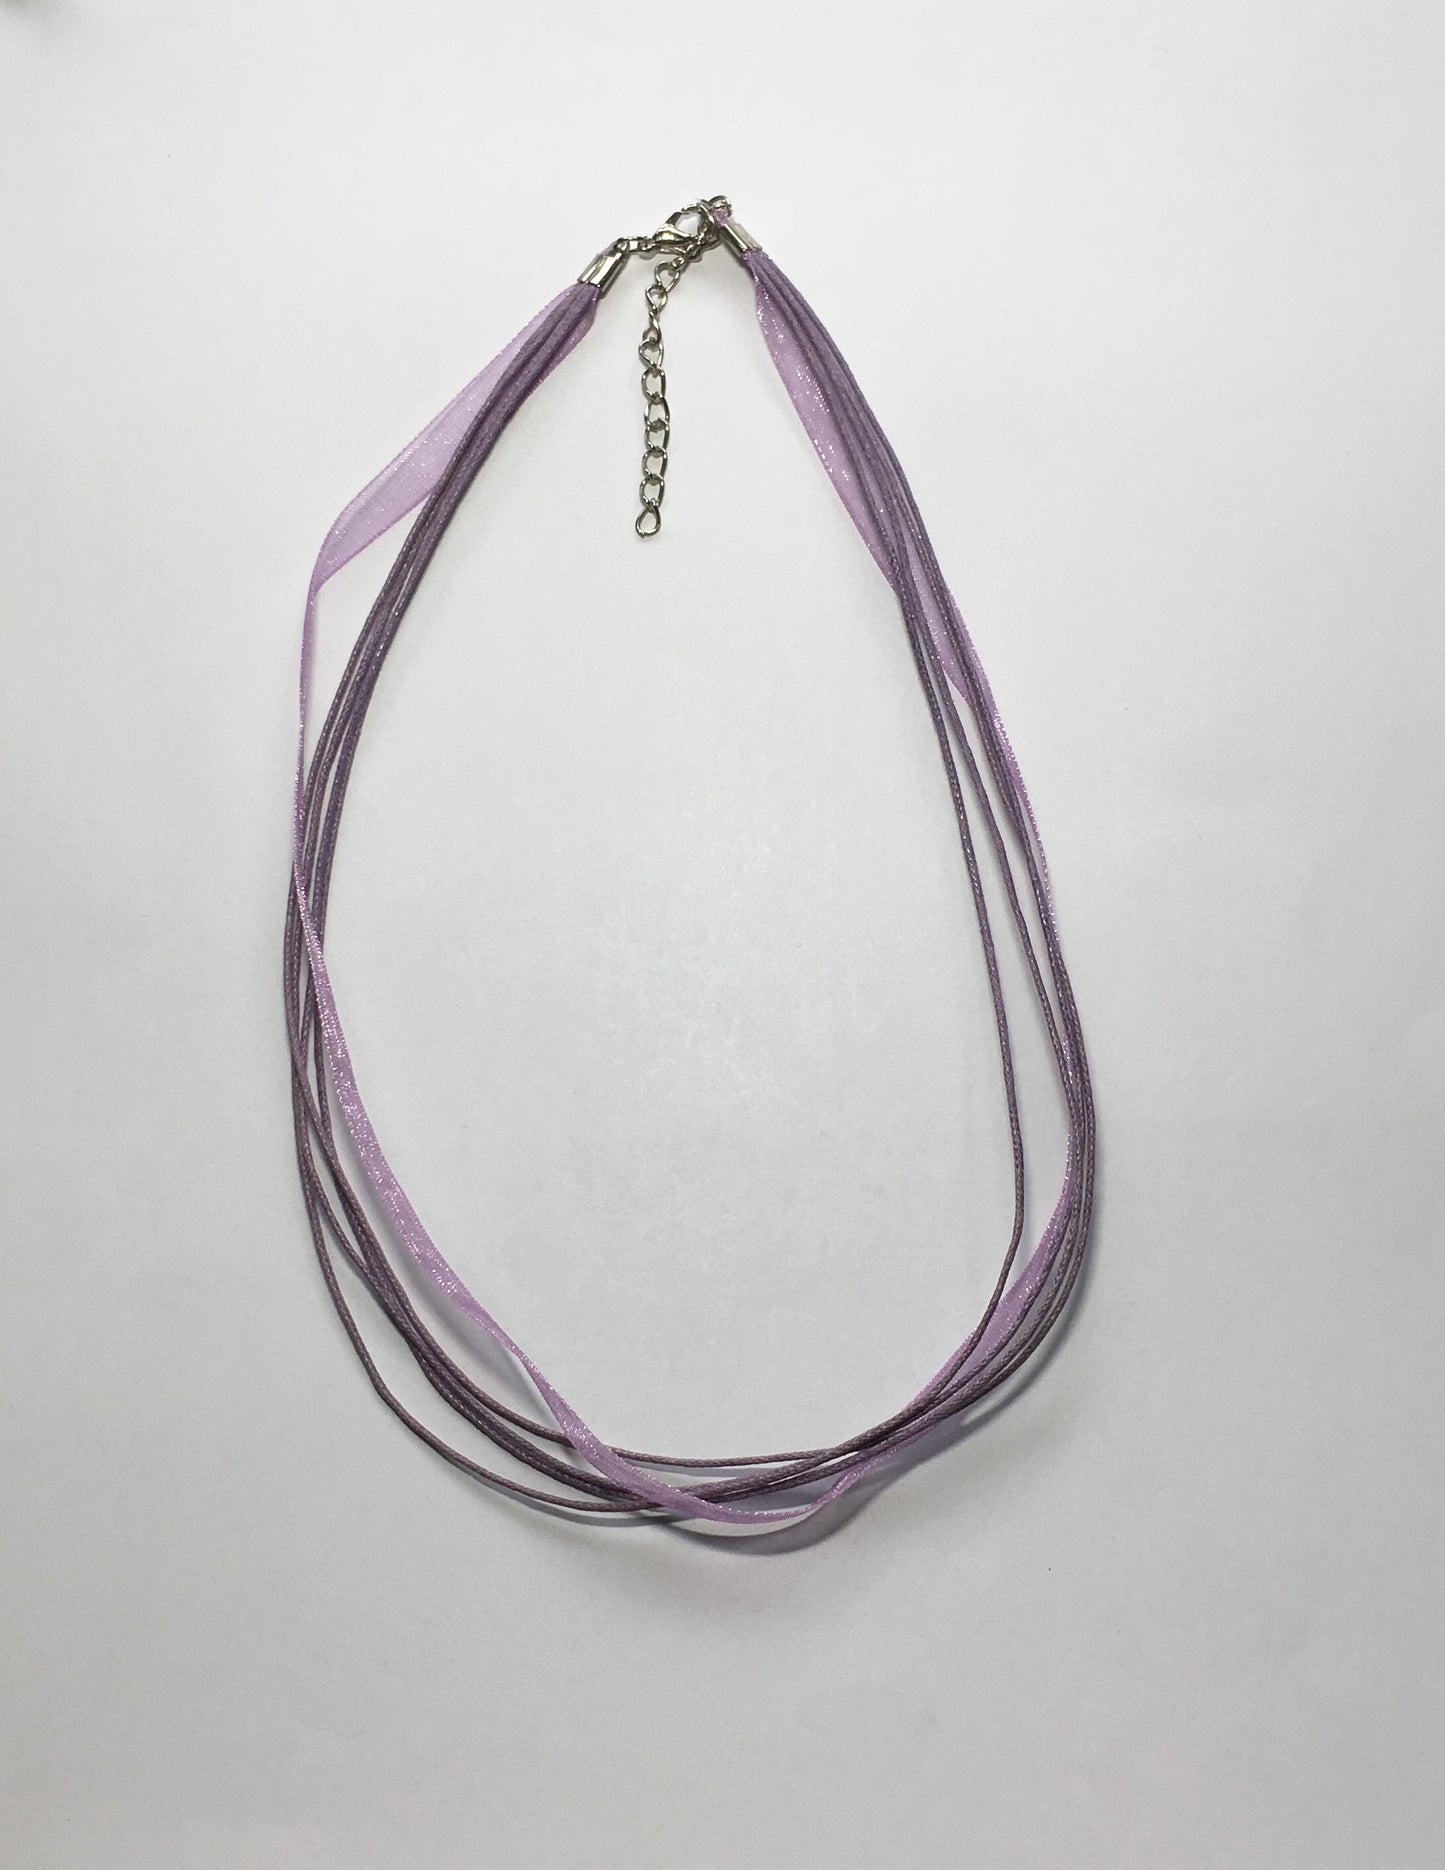 Light Purple Organza Ribbon and Cord Necklace, 16-Inch